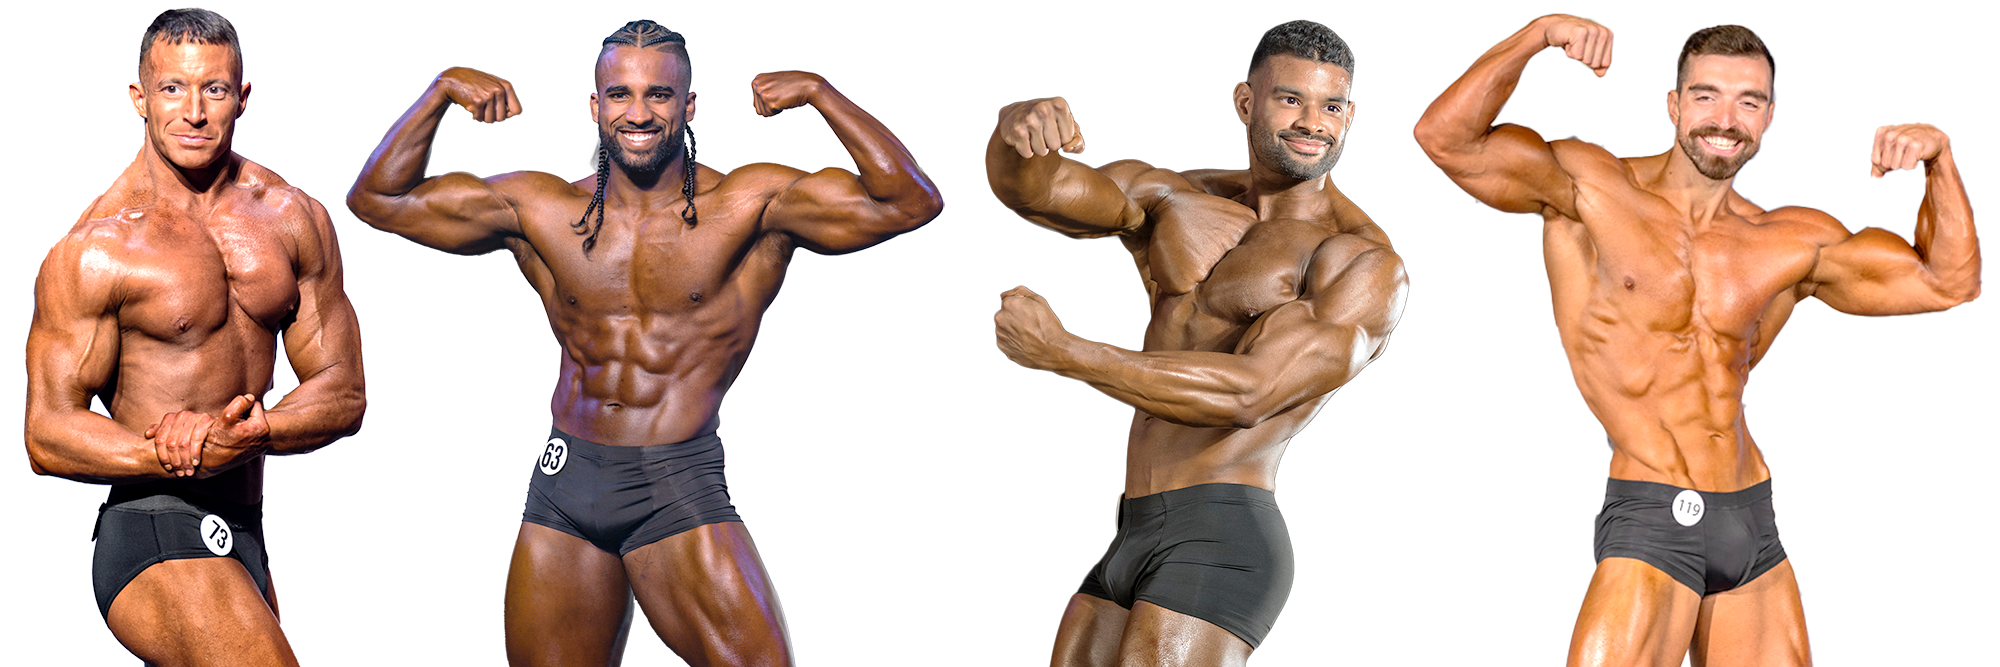 Mandatory Pose Wednesday - Men's Physique Back Pose : r/bodybuilding